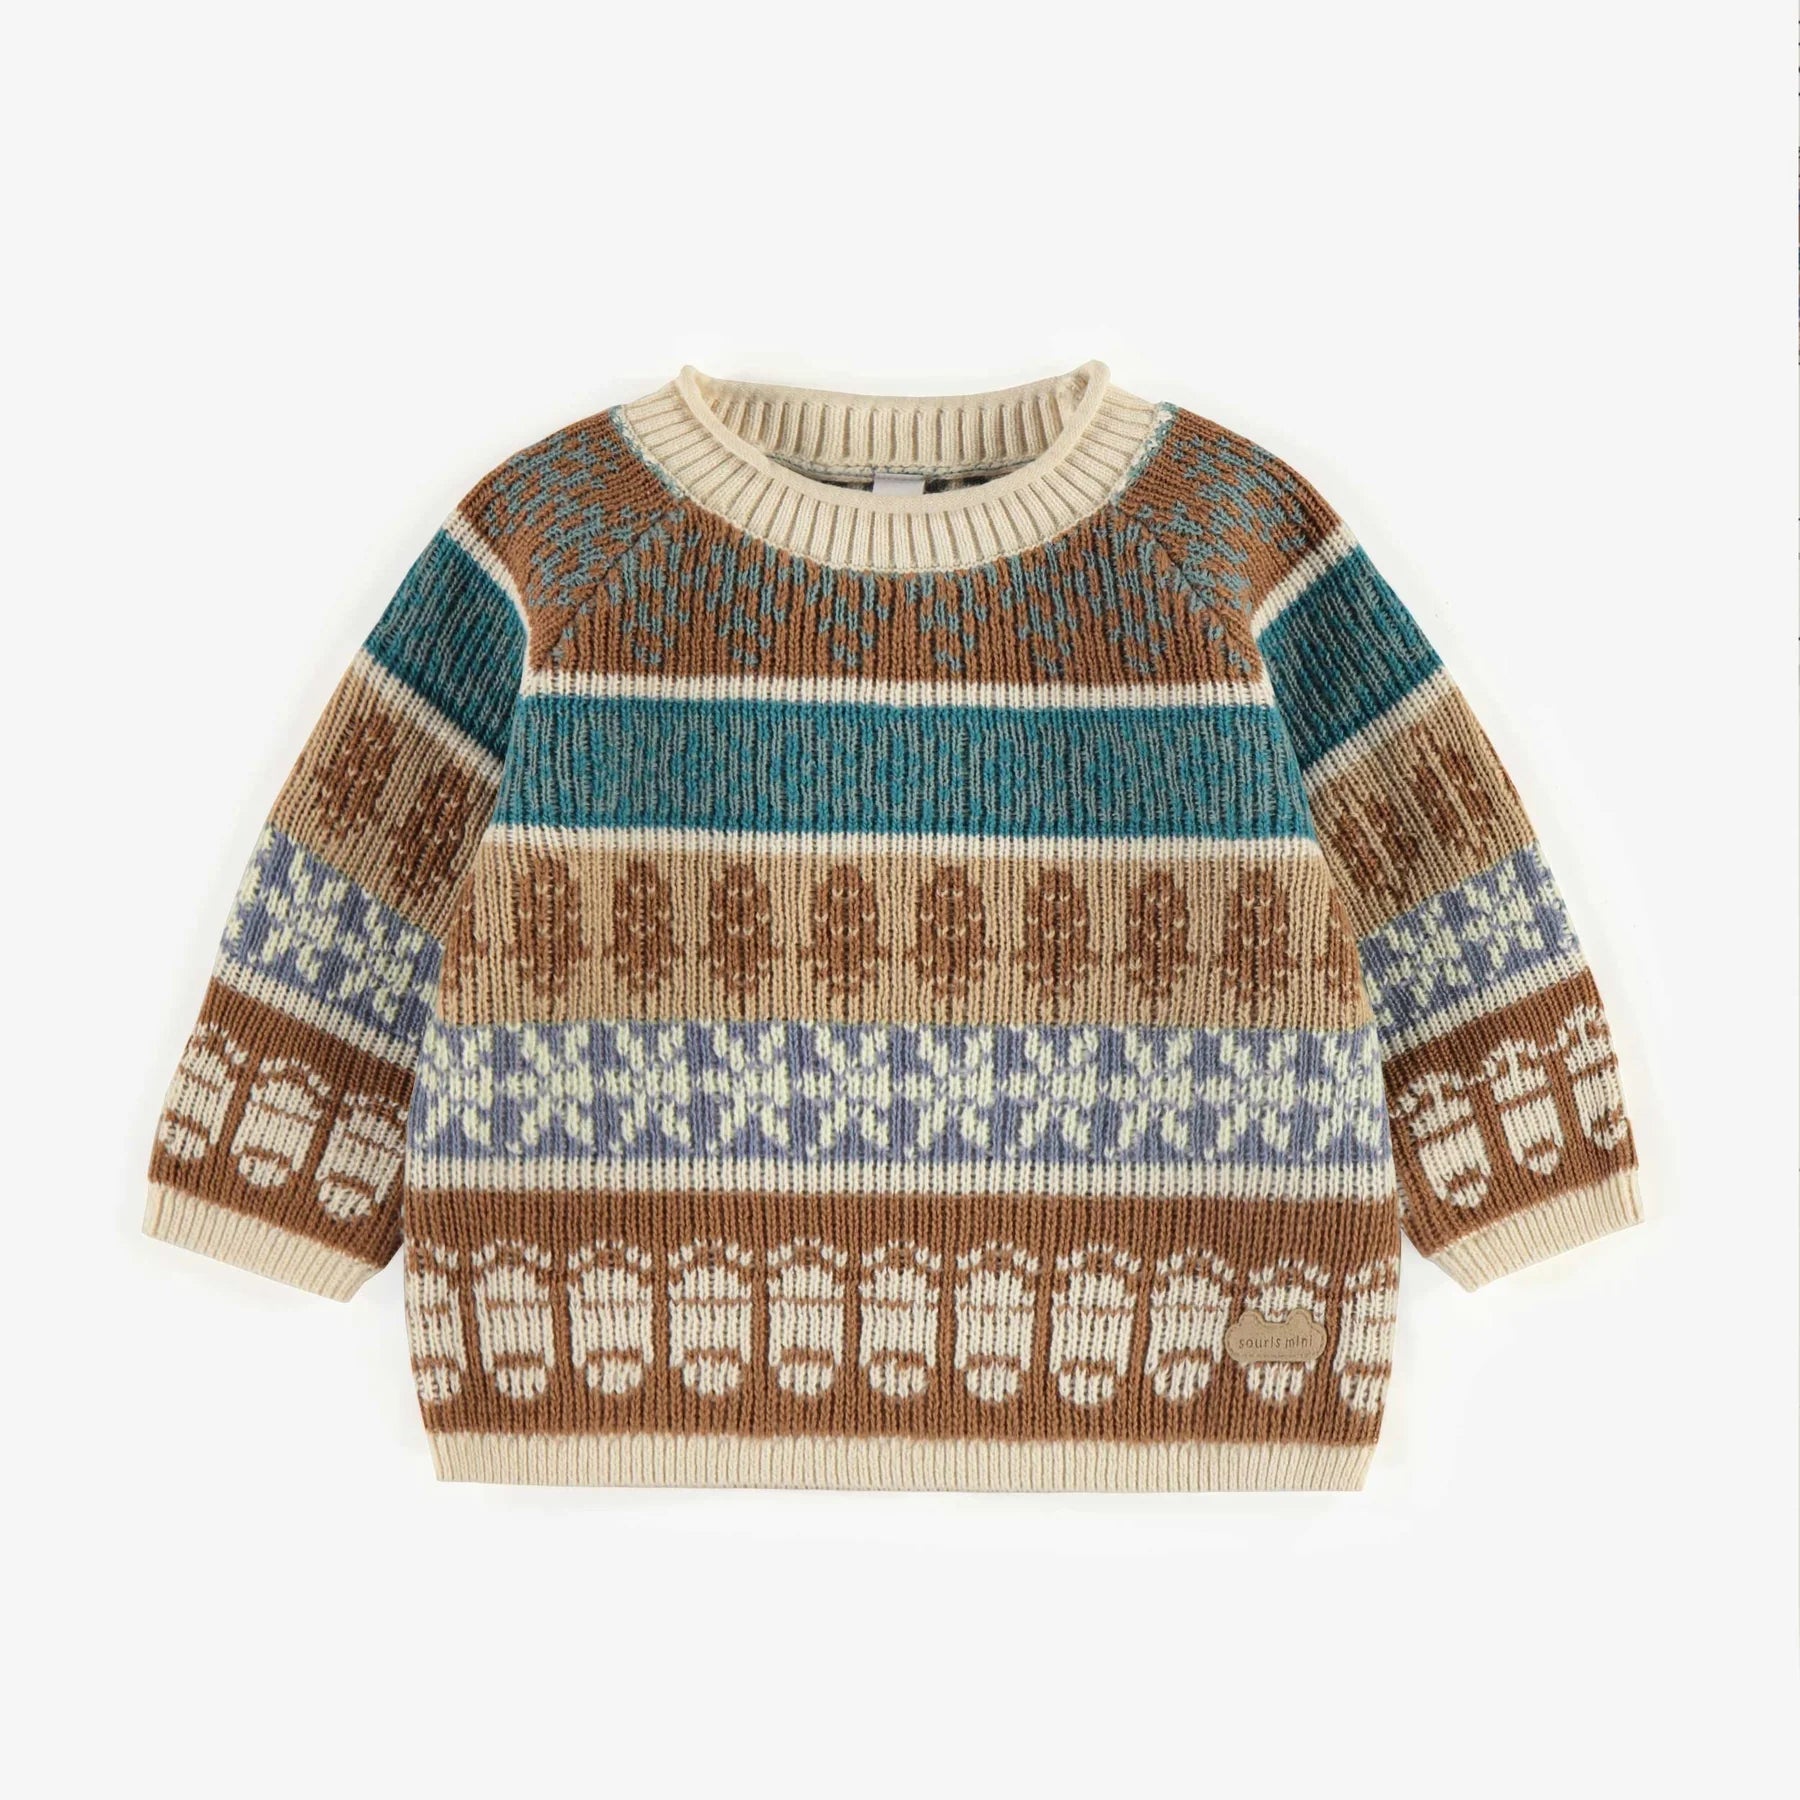 Blue & Brown Knitted Sweater - Wren Harper